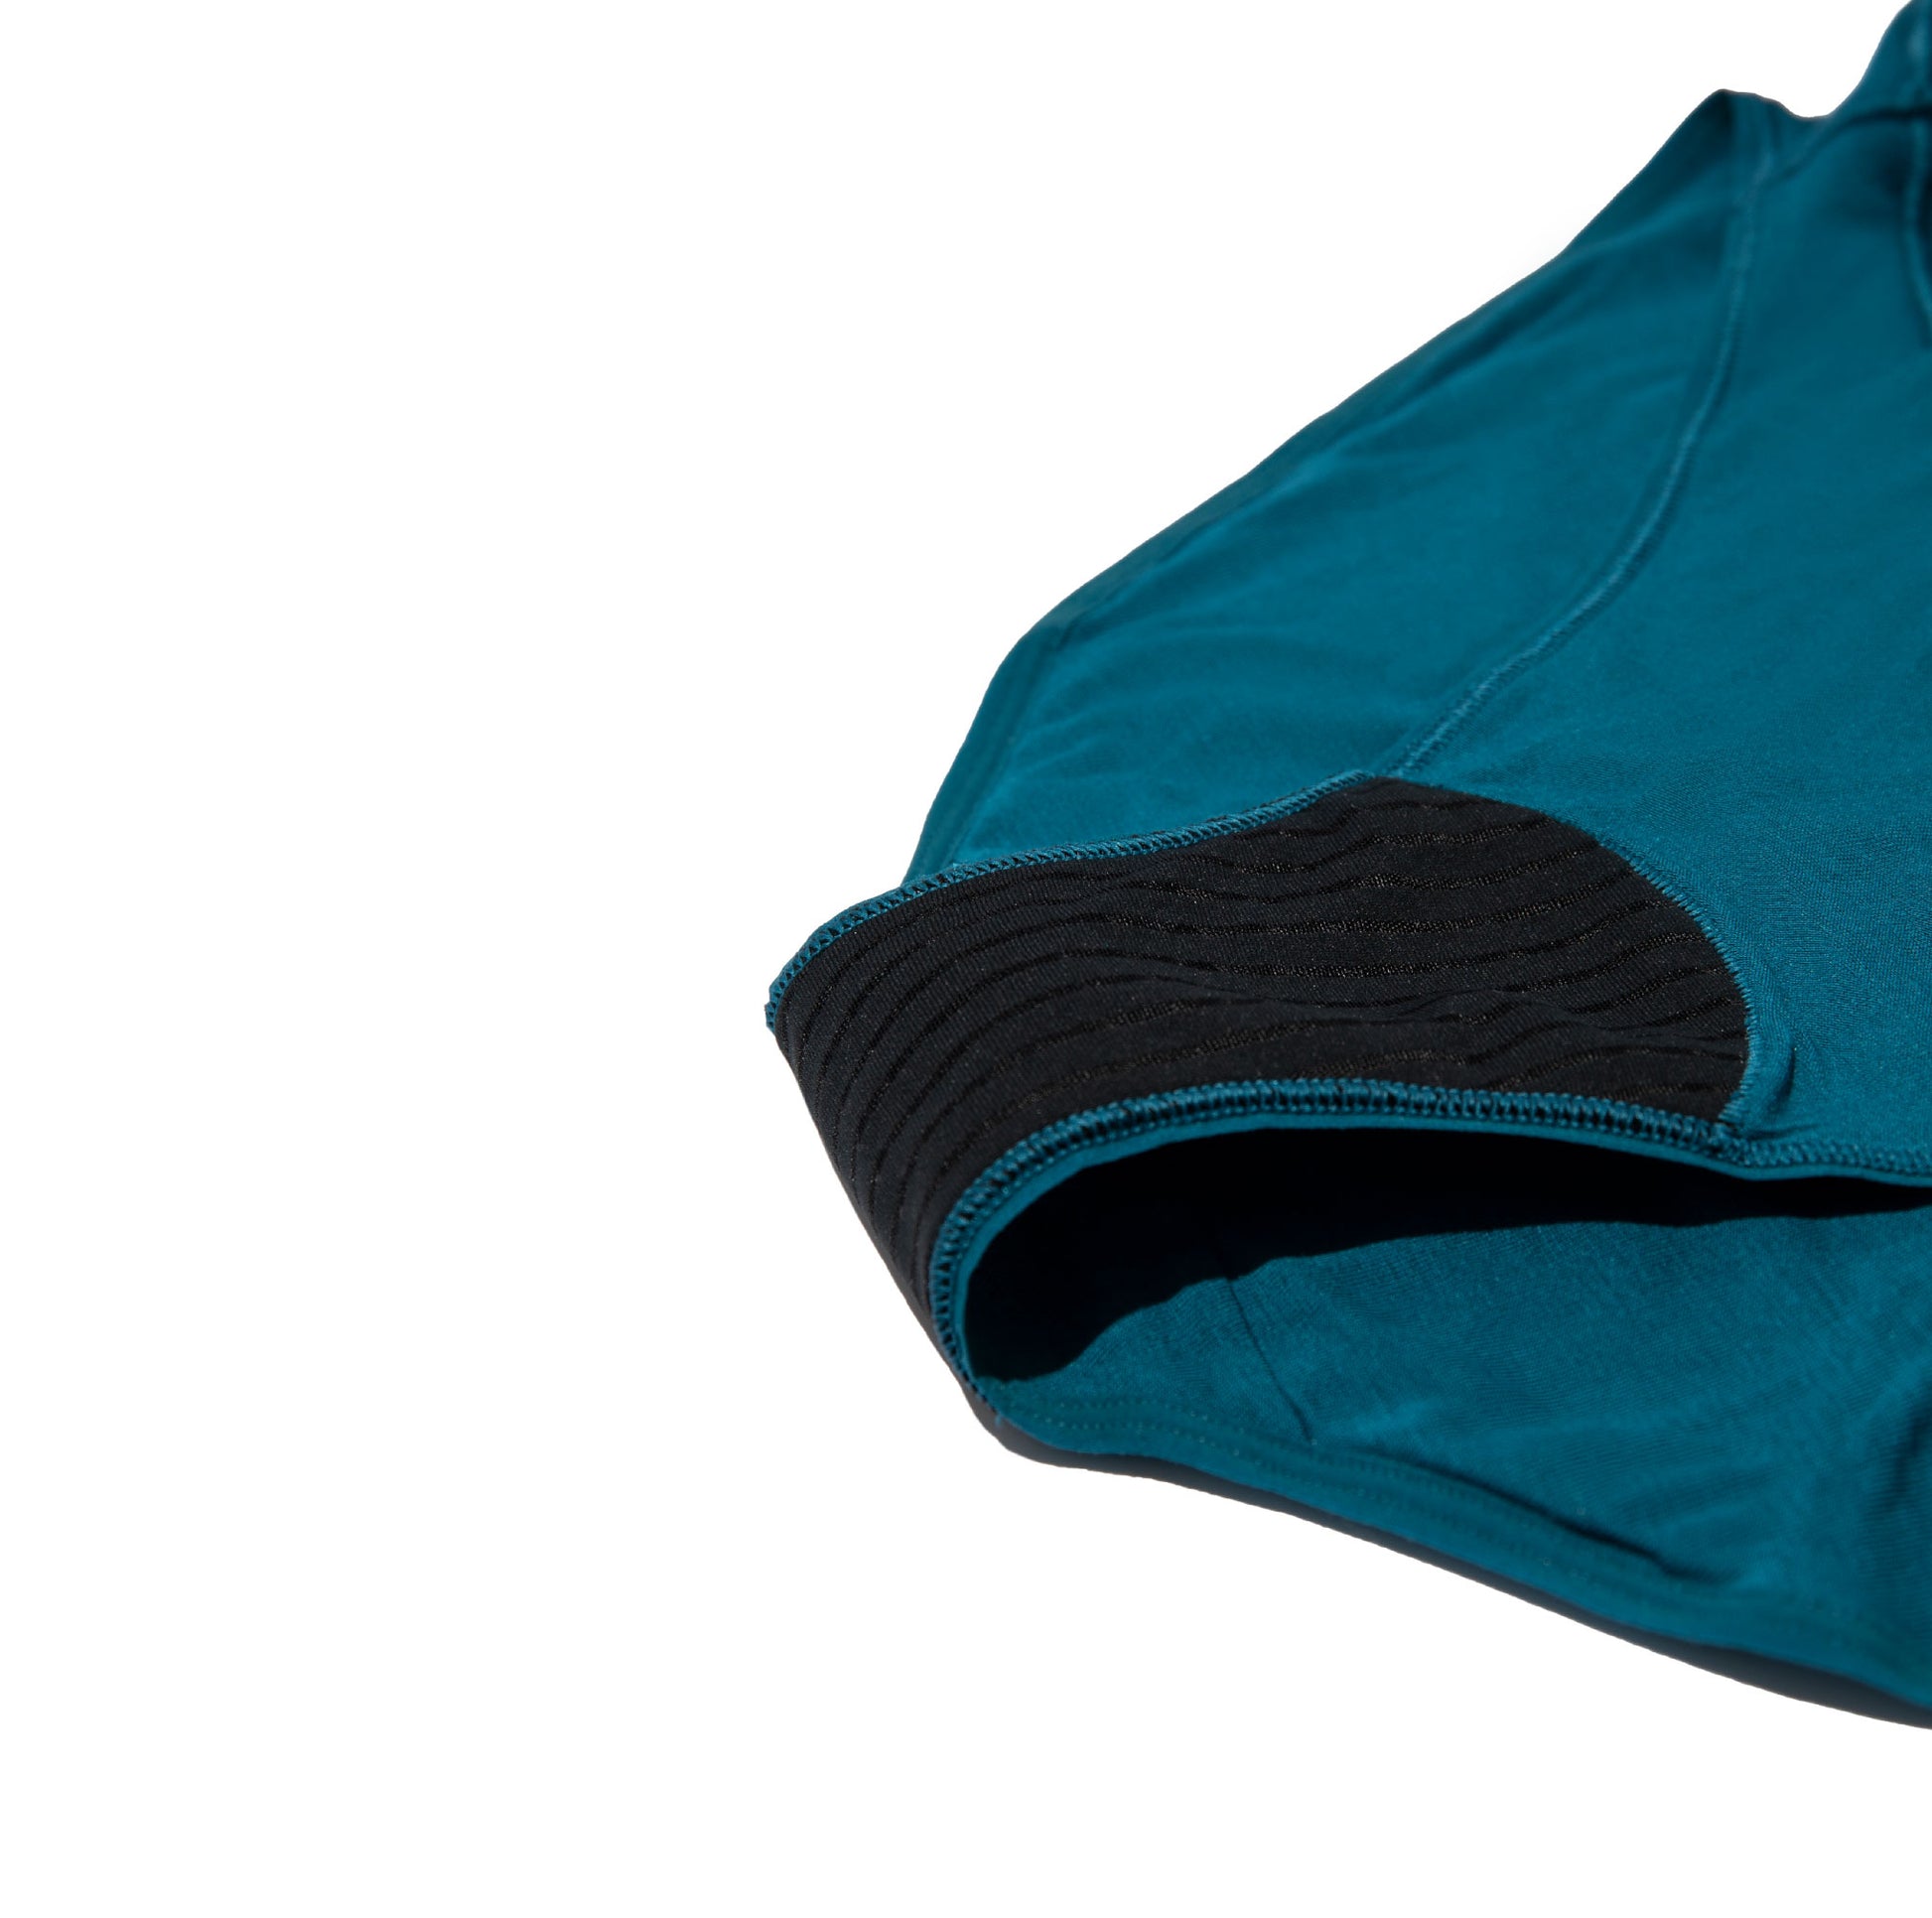 Saalt Leak Proof Period Underwear Regular Absorbency - Super Soft Modal  Comfort Bikini - Deep Marine - M : Target